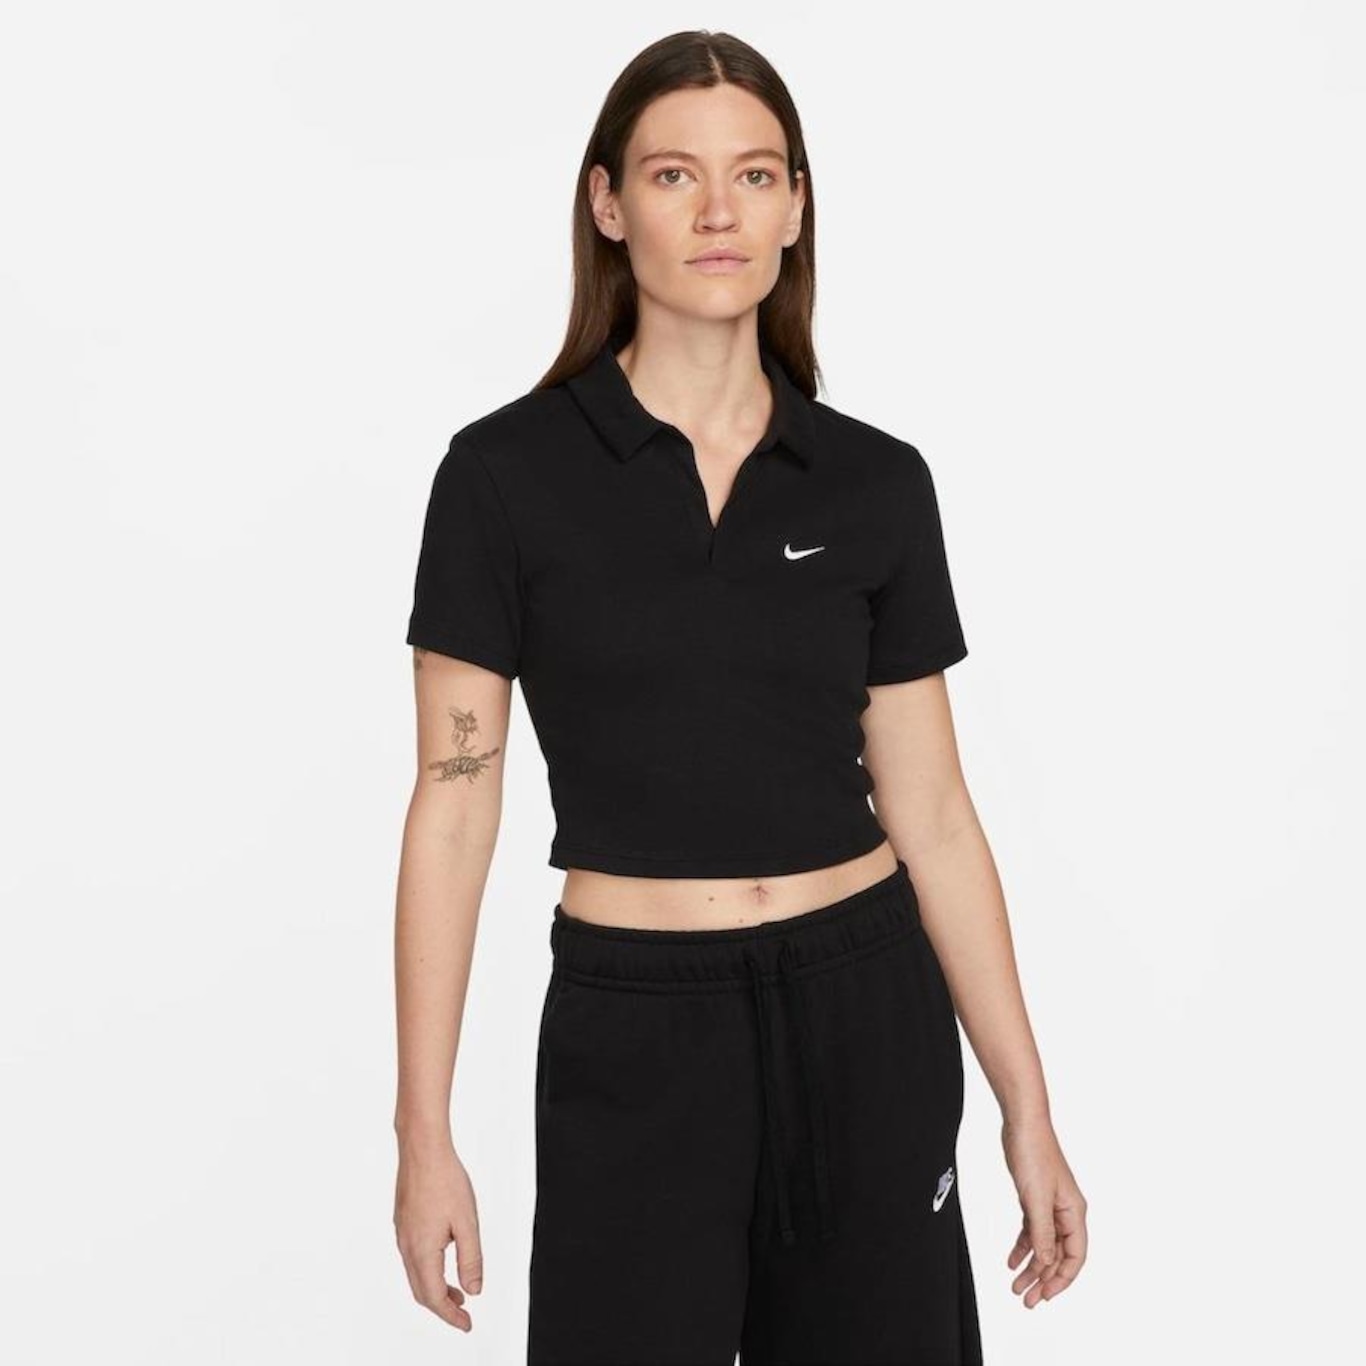 Camisetas para adulto feminino - Nike - Ofertas e Preços